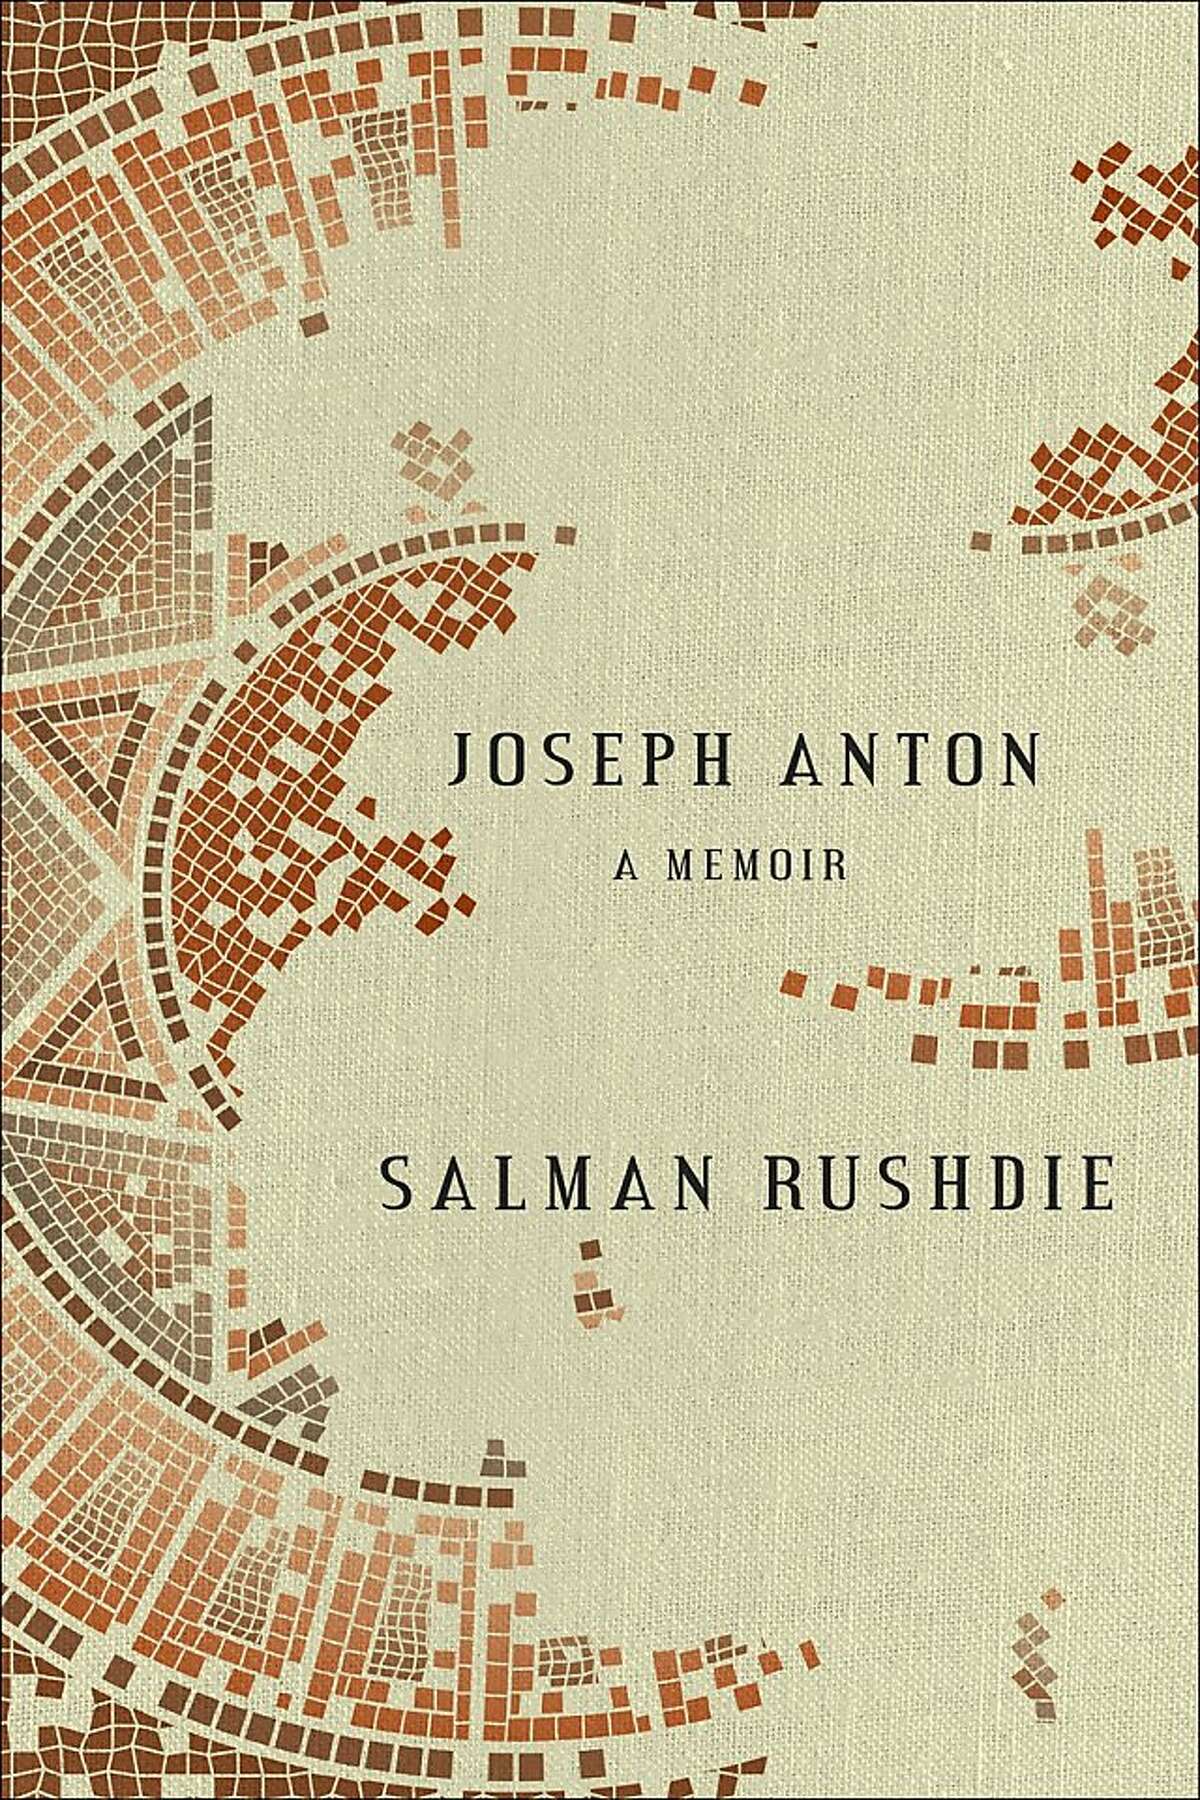 Joseph Anton, by Salman Rushdie